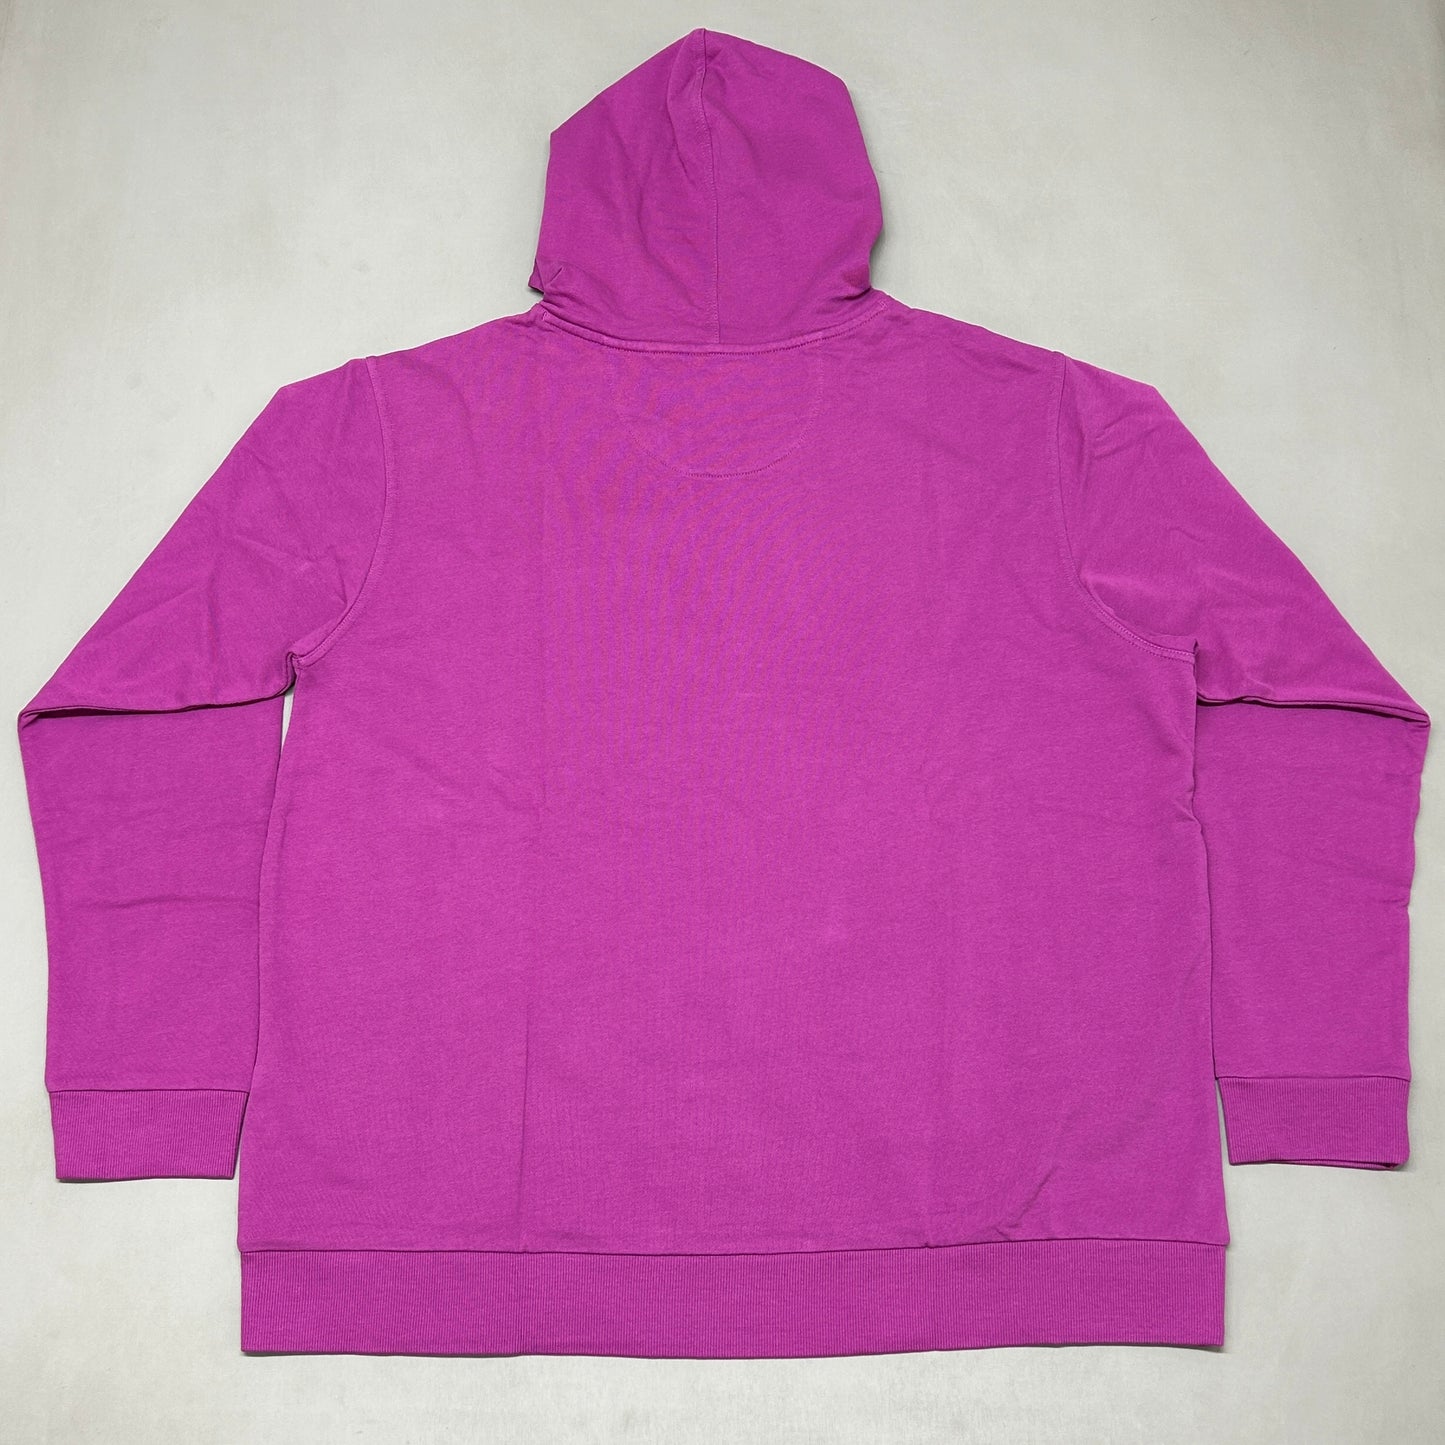 PATAGONIA Regenerative Organic Cotton Hoody Sweatshirt Sz S Amaranth Pink (New)